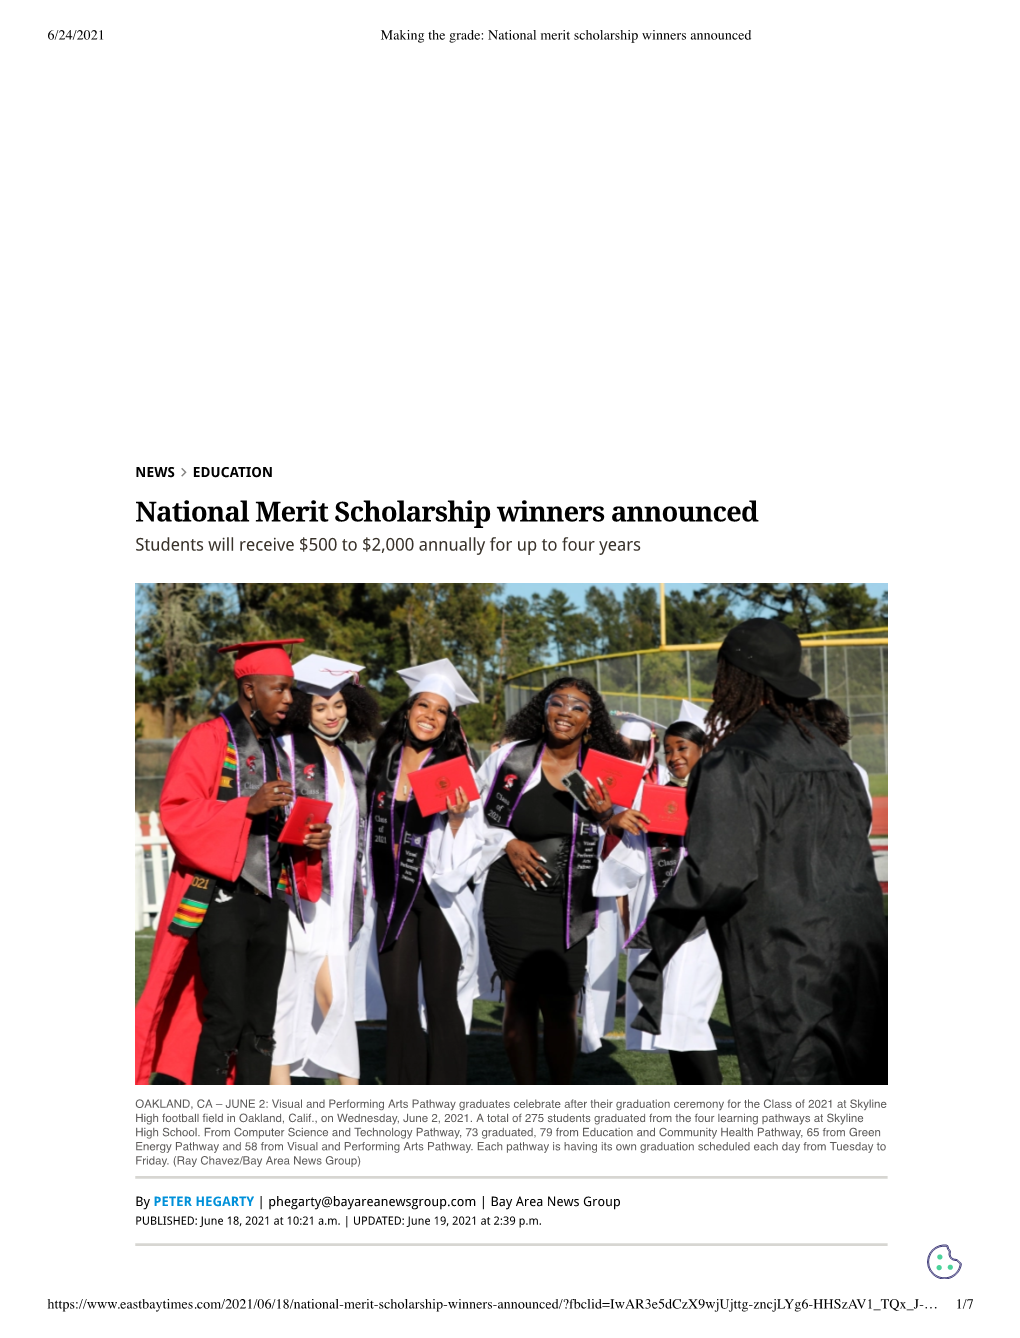 National Merit Scholarship Winners Announced ___